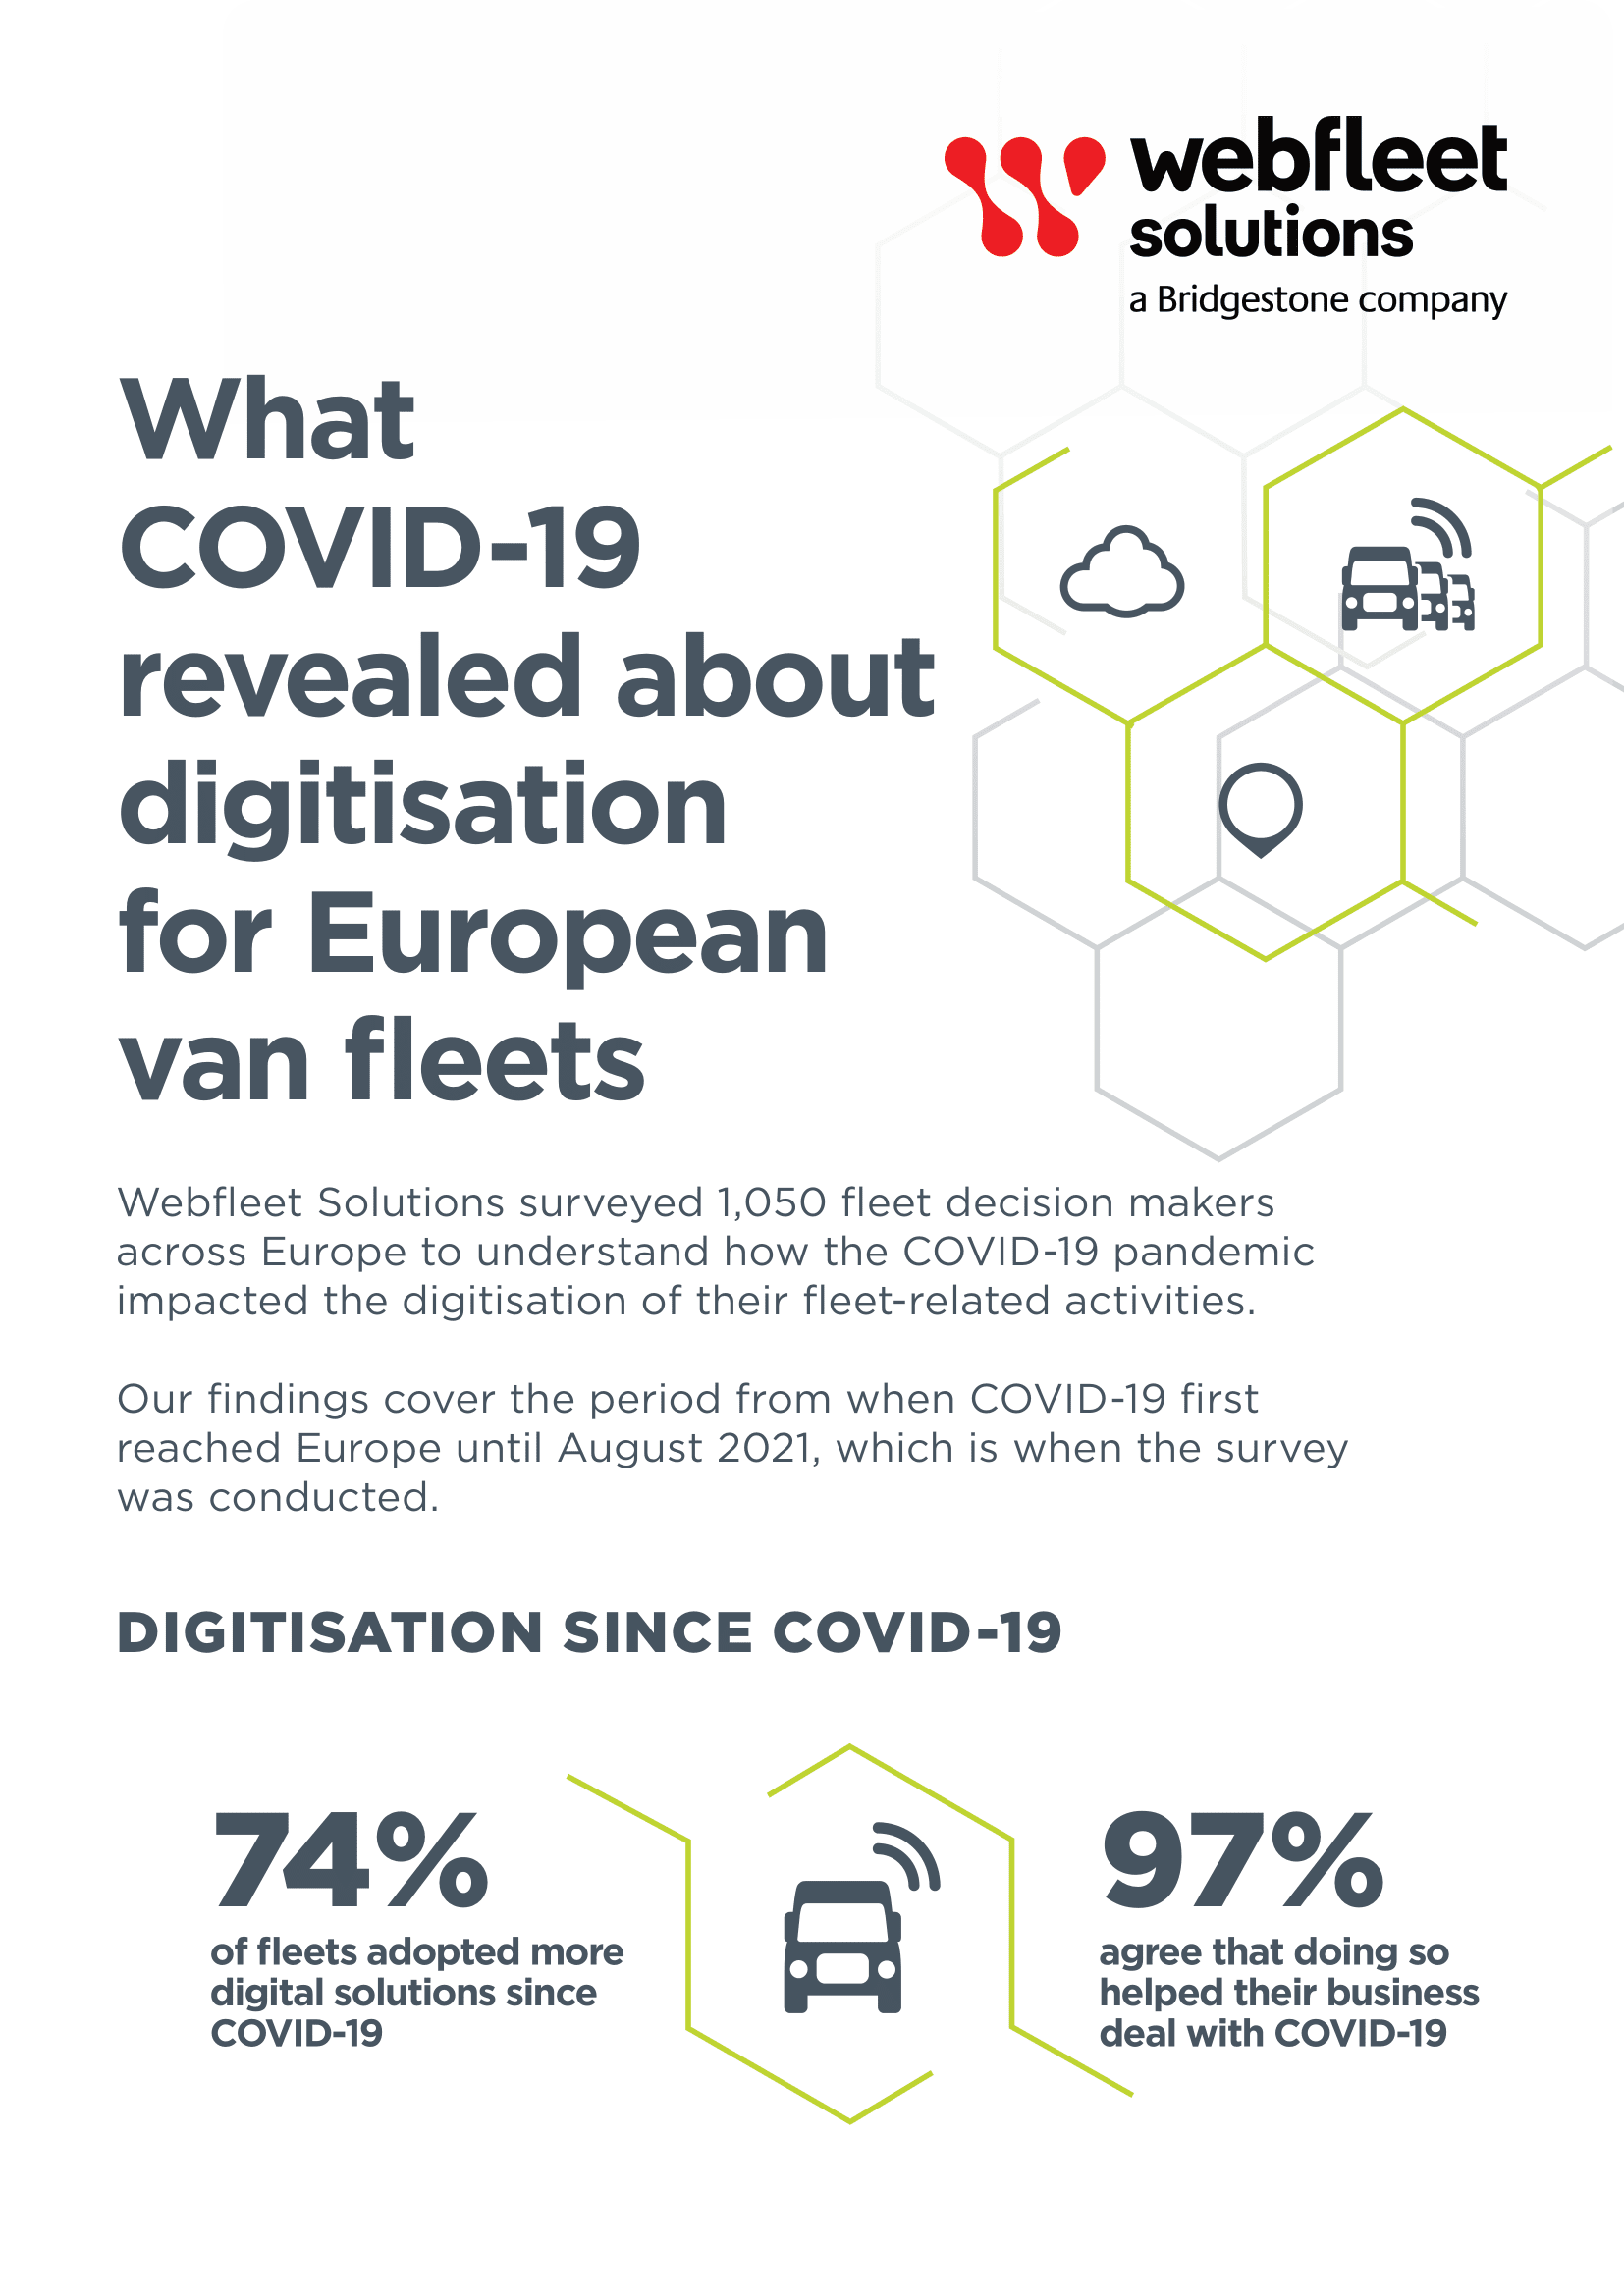 Infographic: digitisation for van fleets since COVID-19